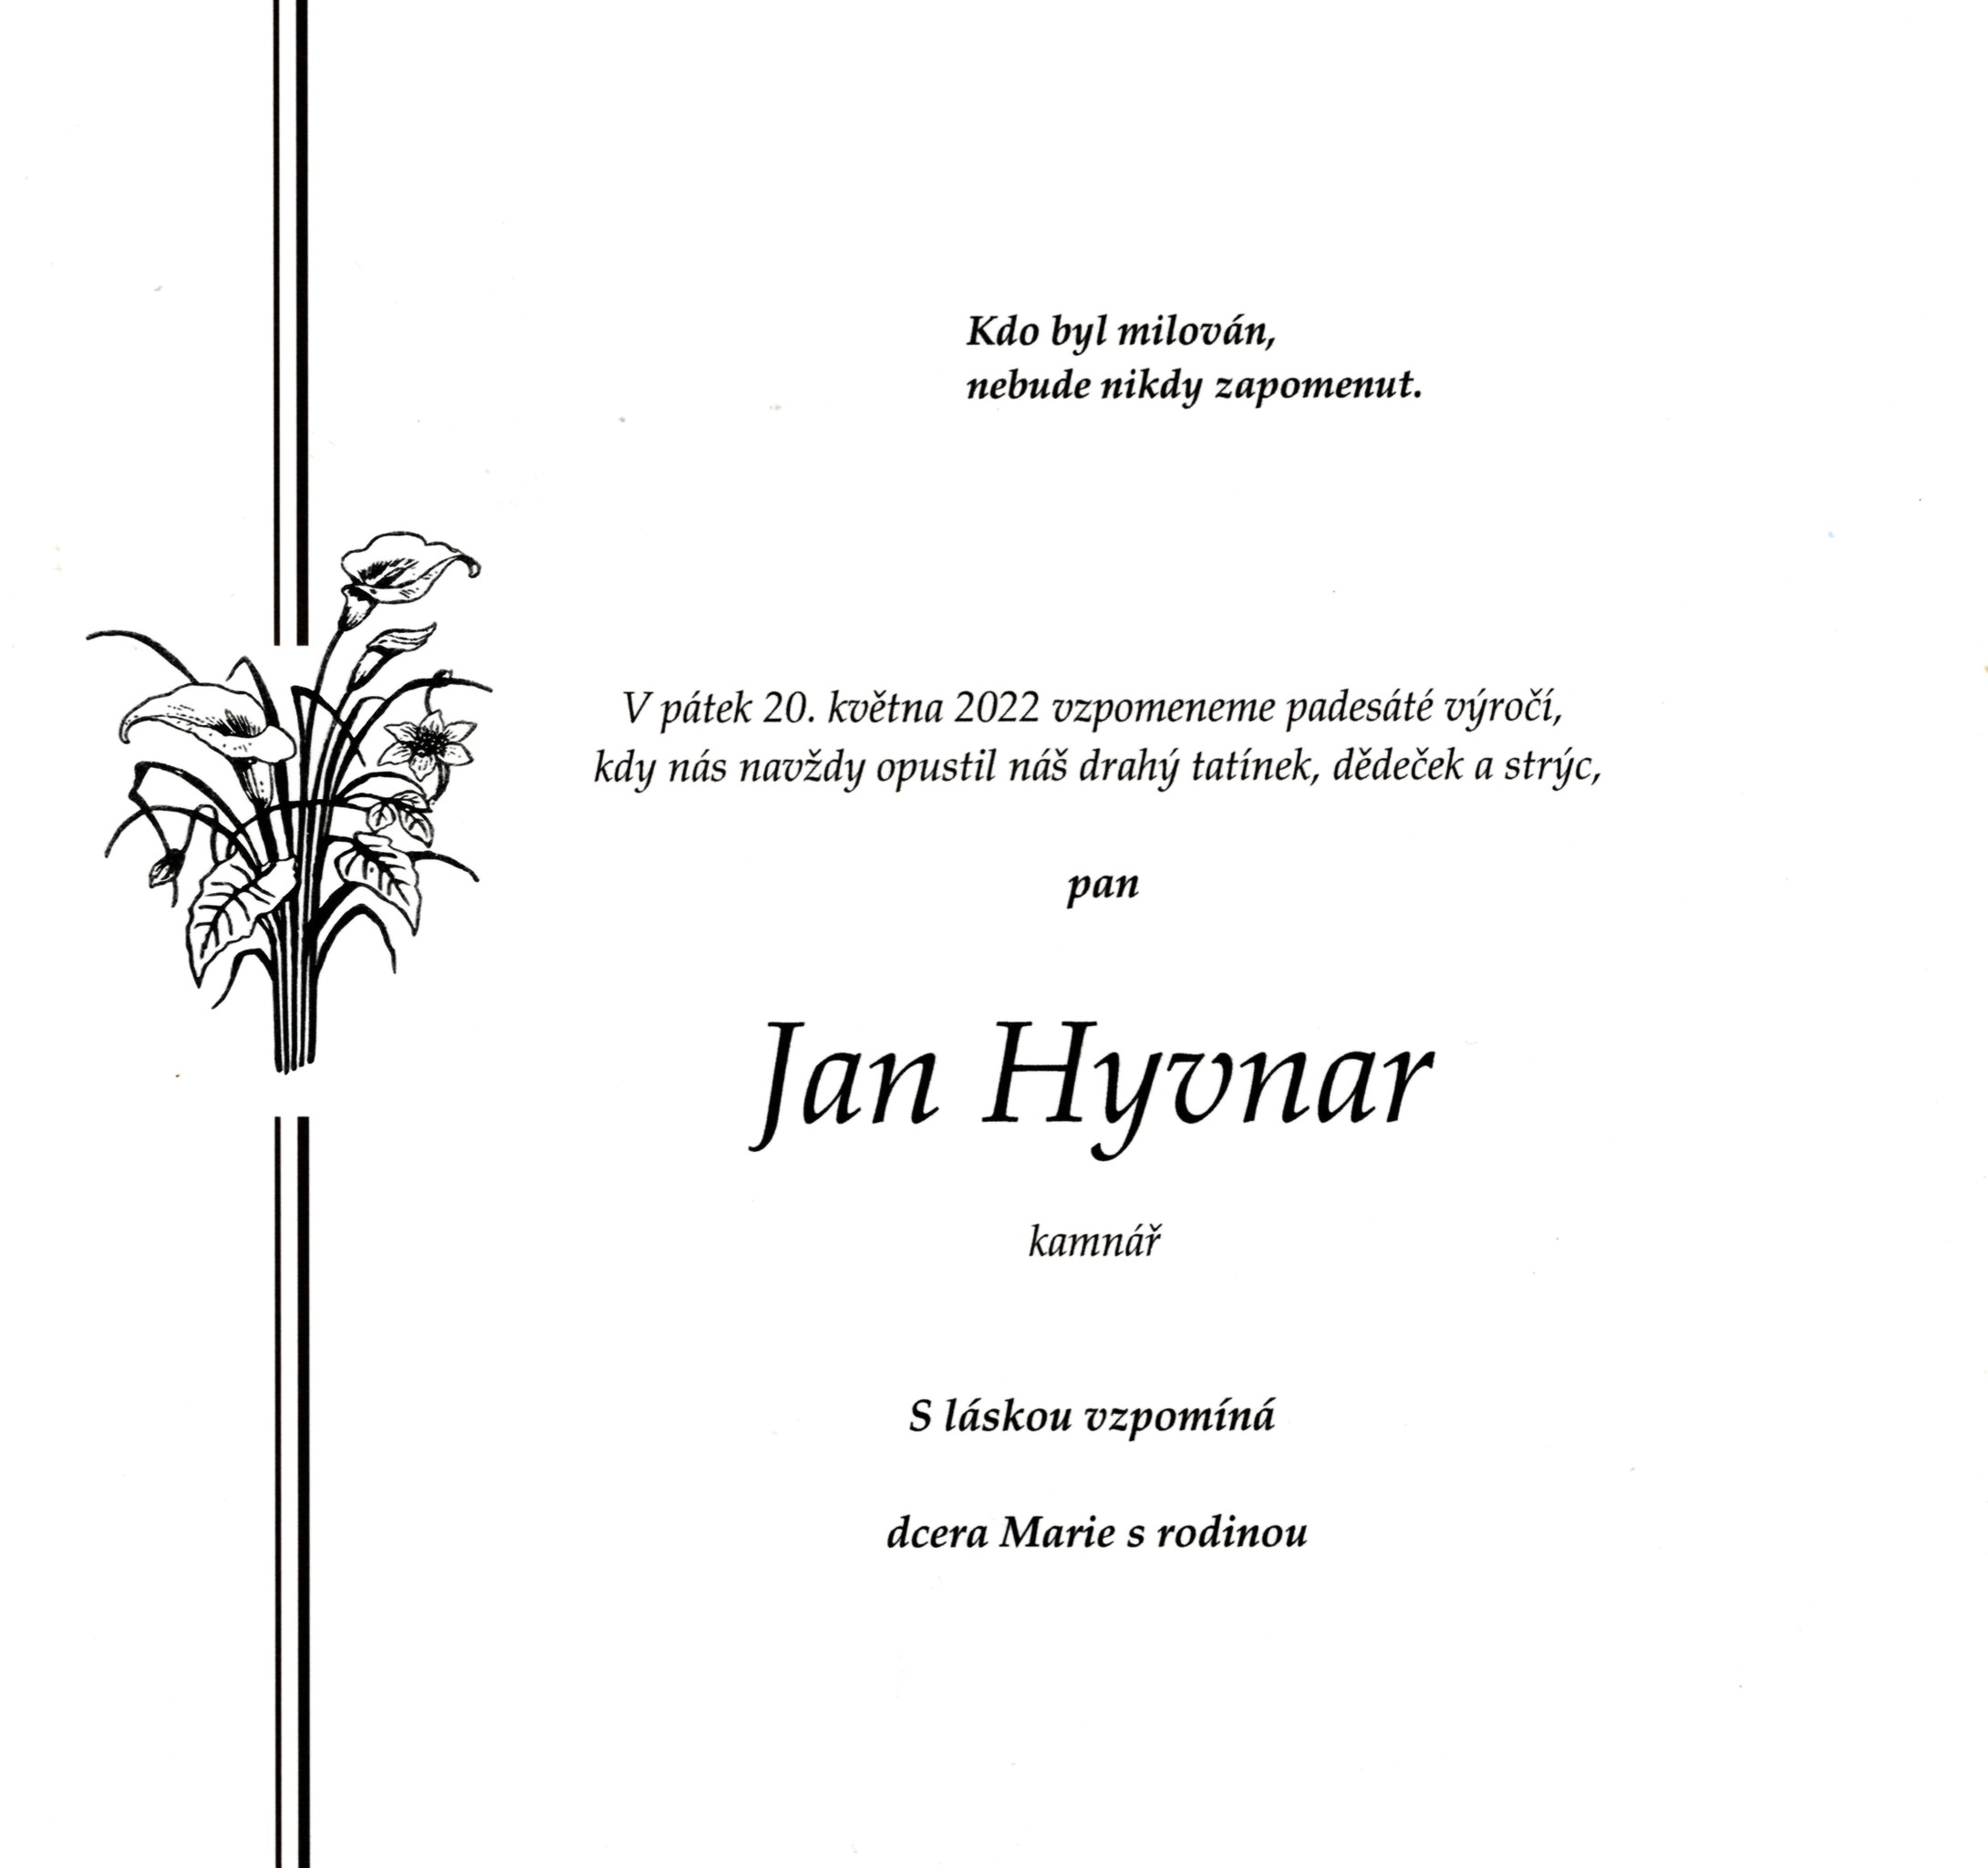 Jan Hyvnar